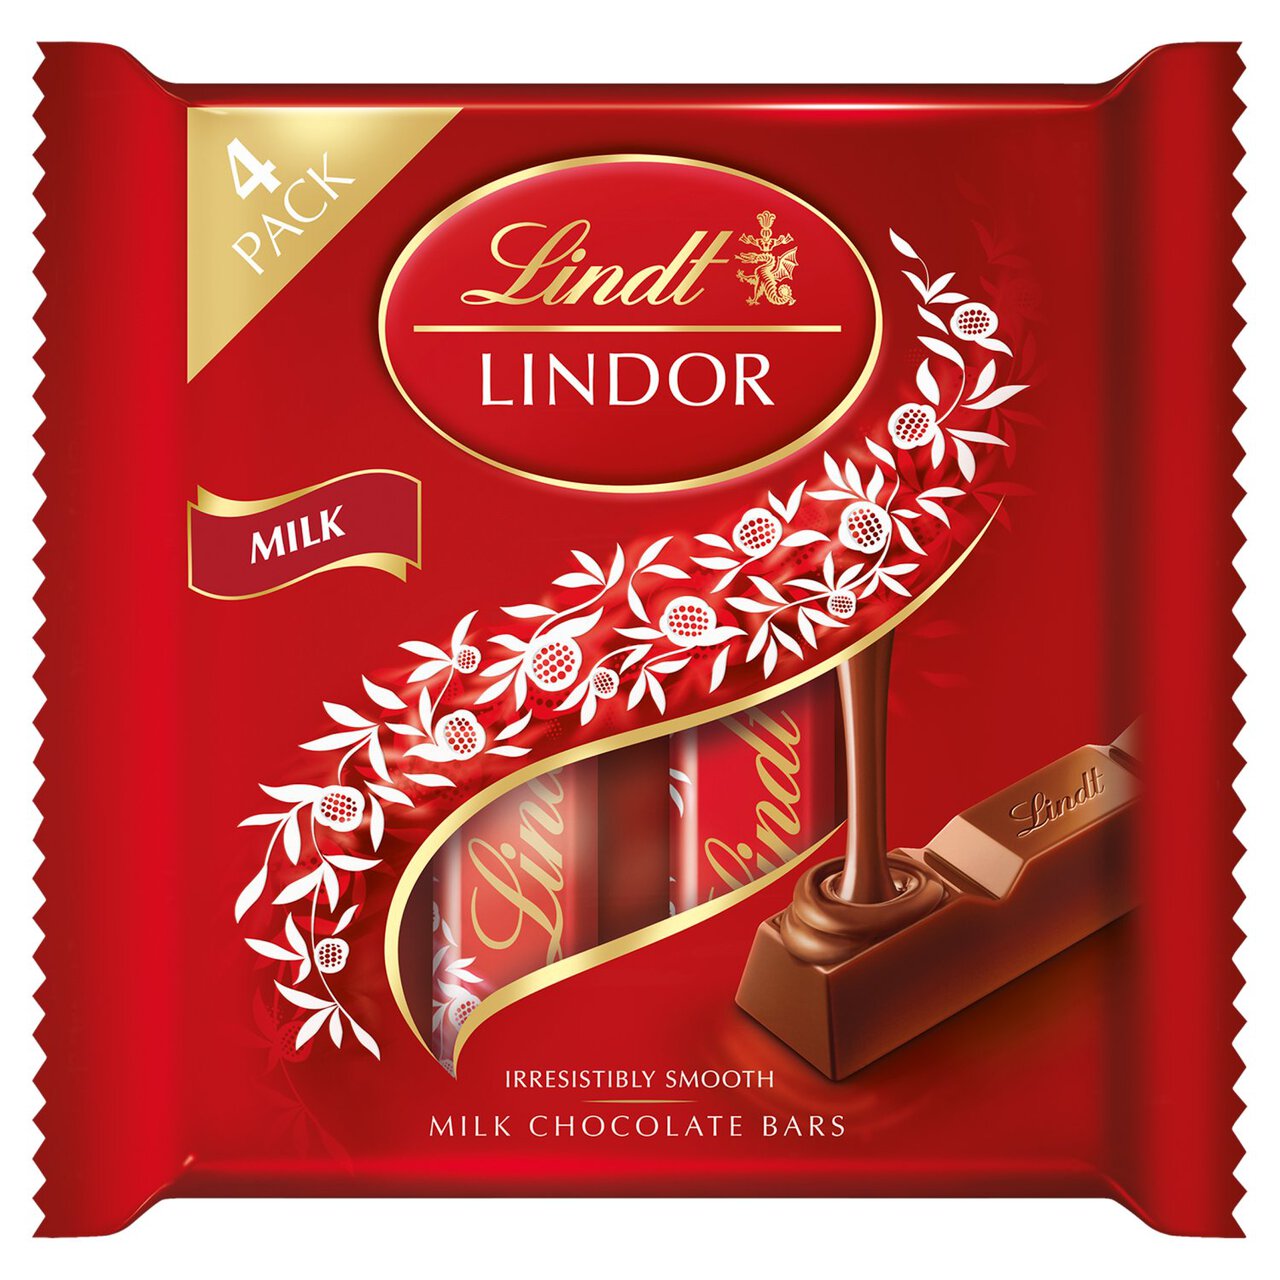 Lindt Lindor 4 Milk Chocolate Bars 100g